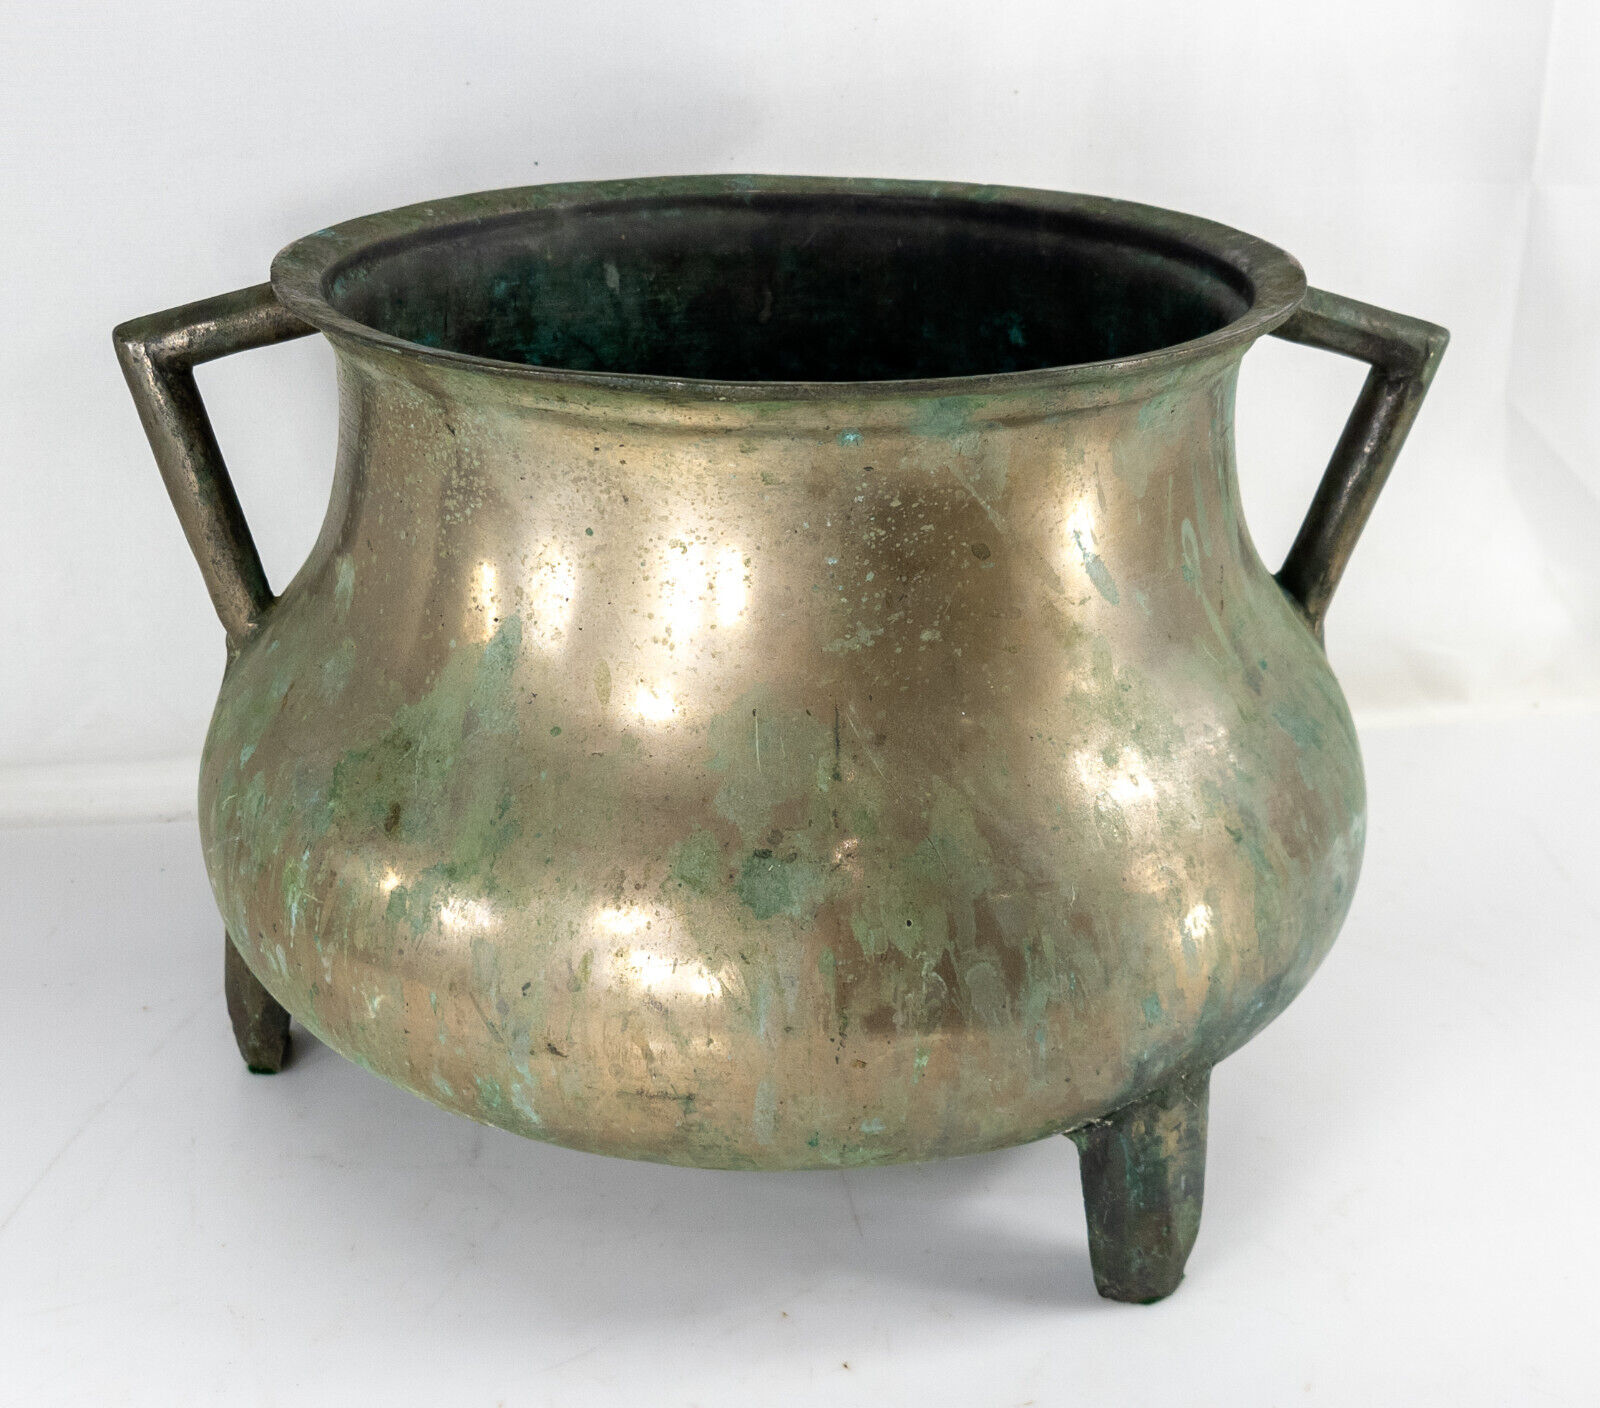 Antique European Verdigris Bronze Posnet Cookpot Possibly Netherlands of Flemish